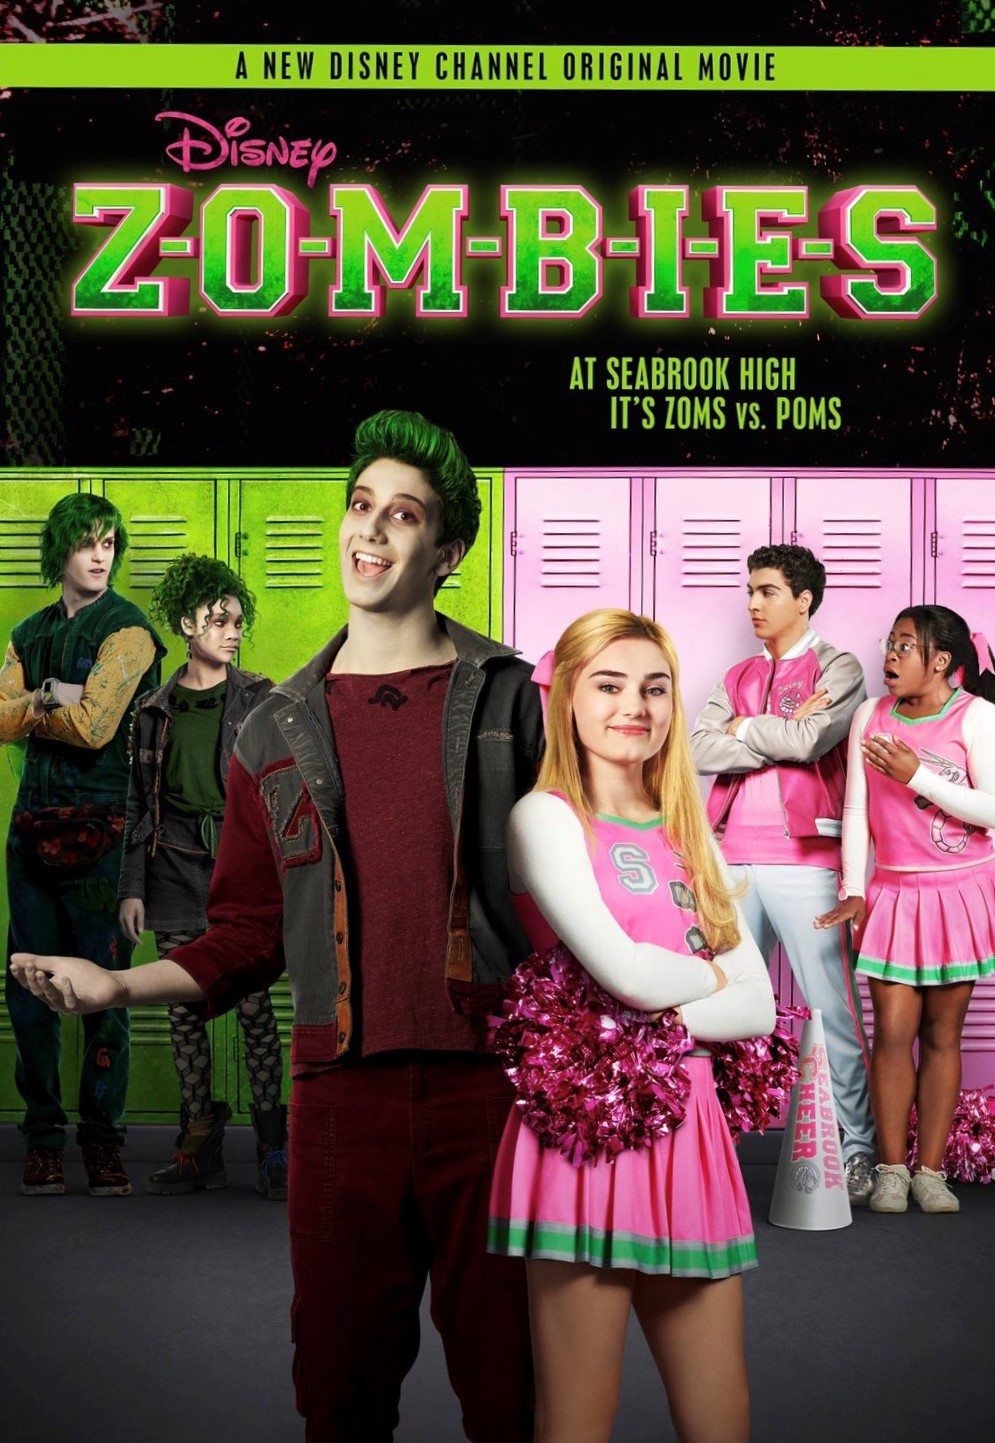 Disney Channel Greenlights 'Zombies 2